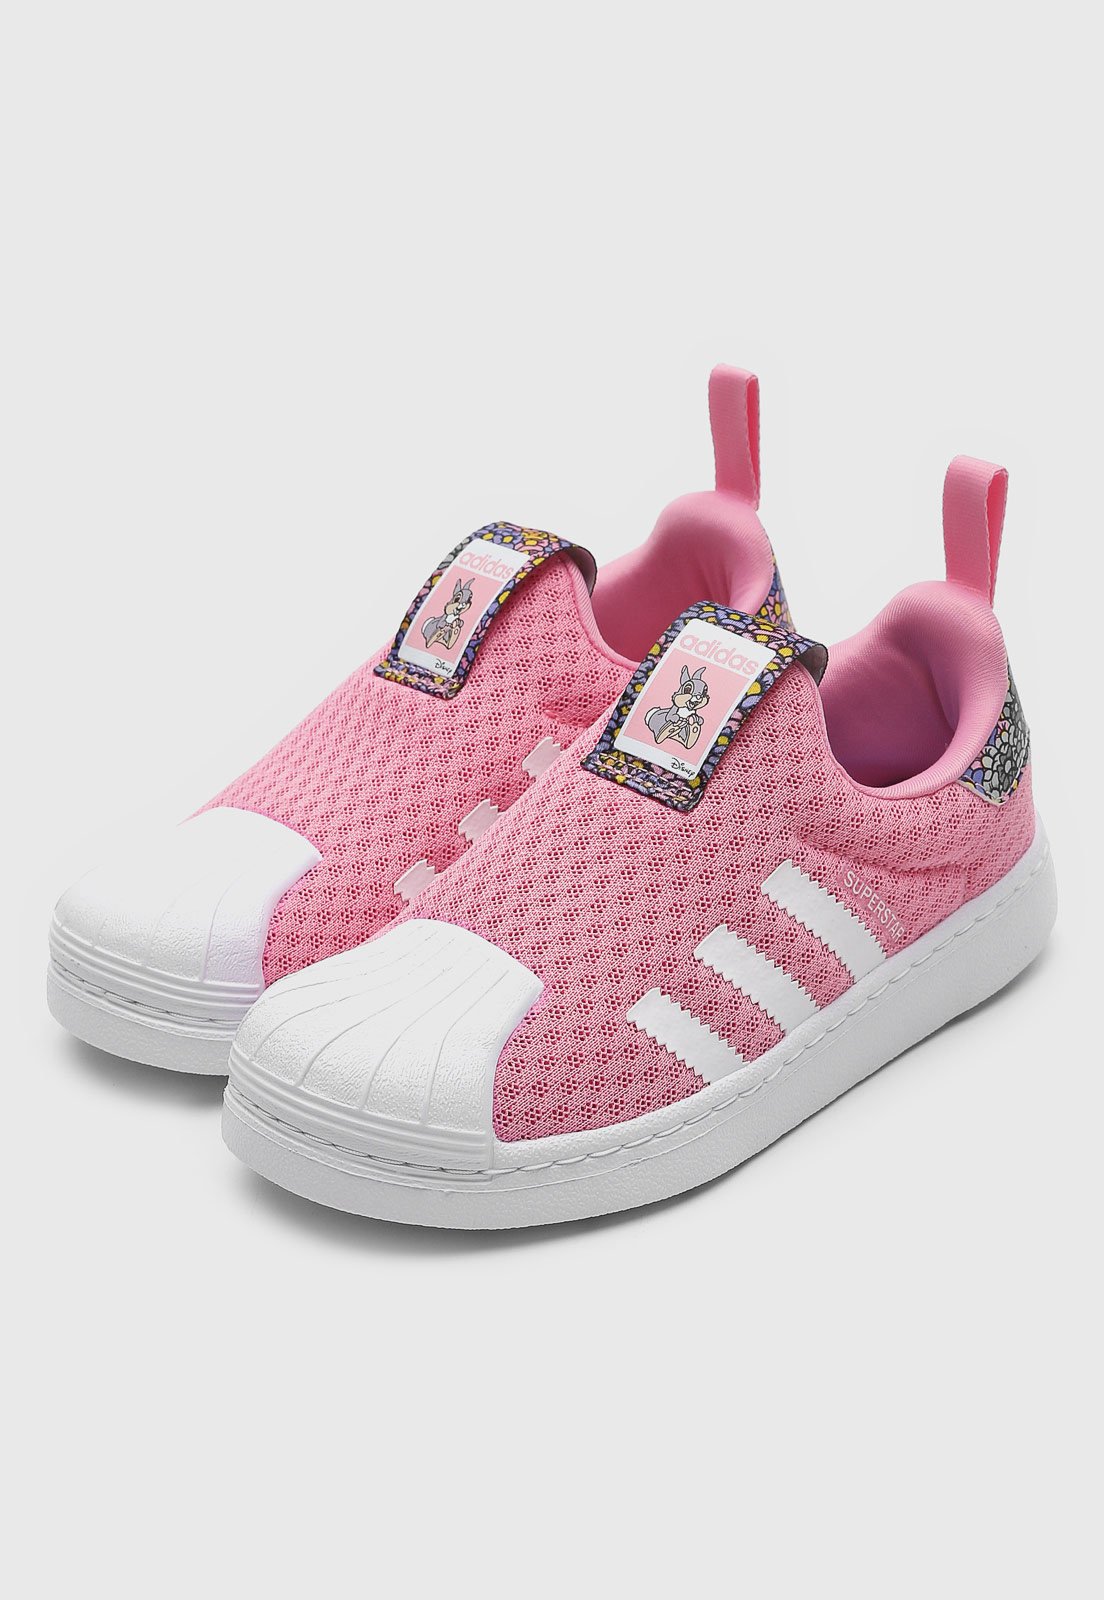 Mobile Stock - Seu Estoque Digital - tenis infantil adidas super star branco  rosa